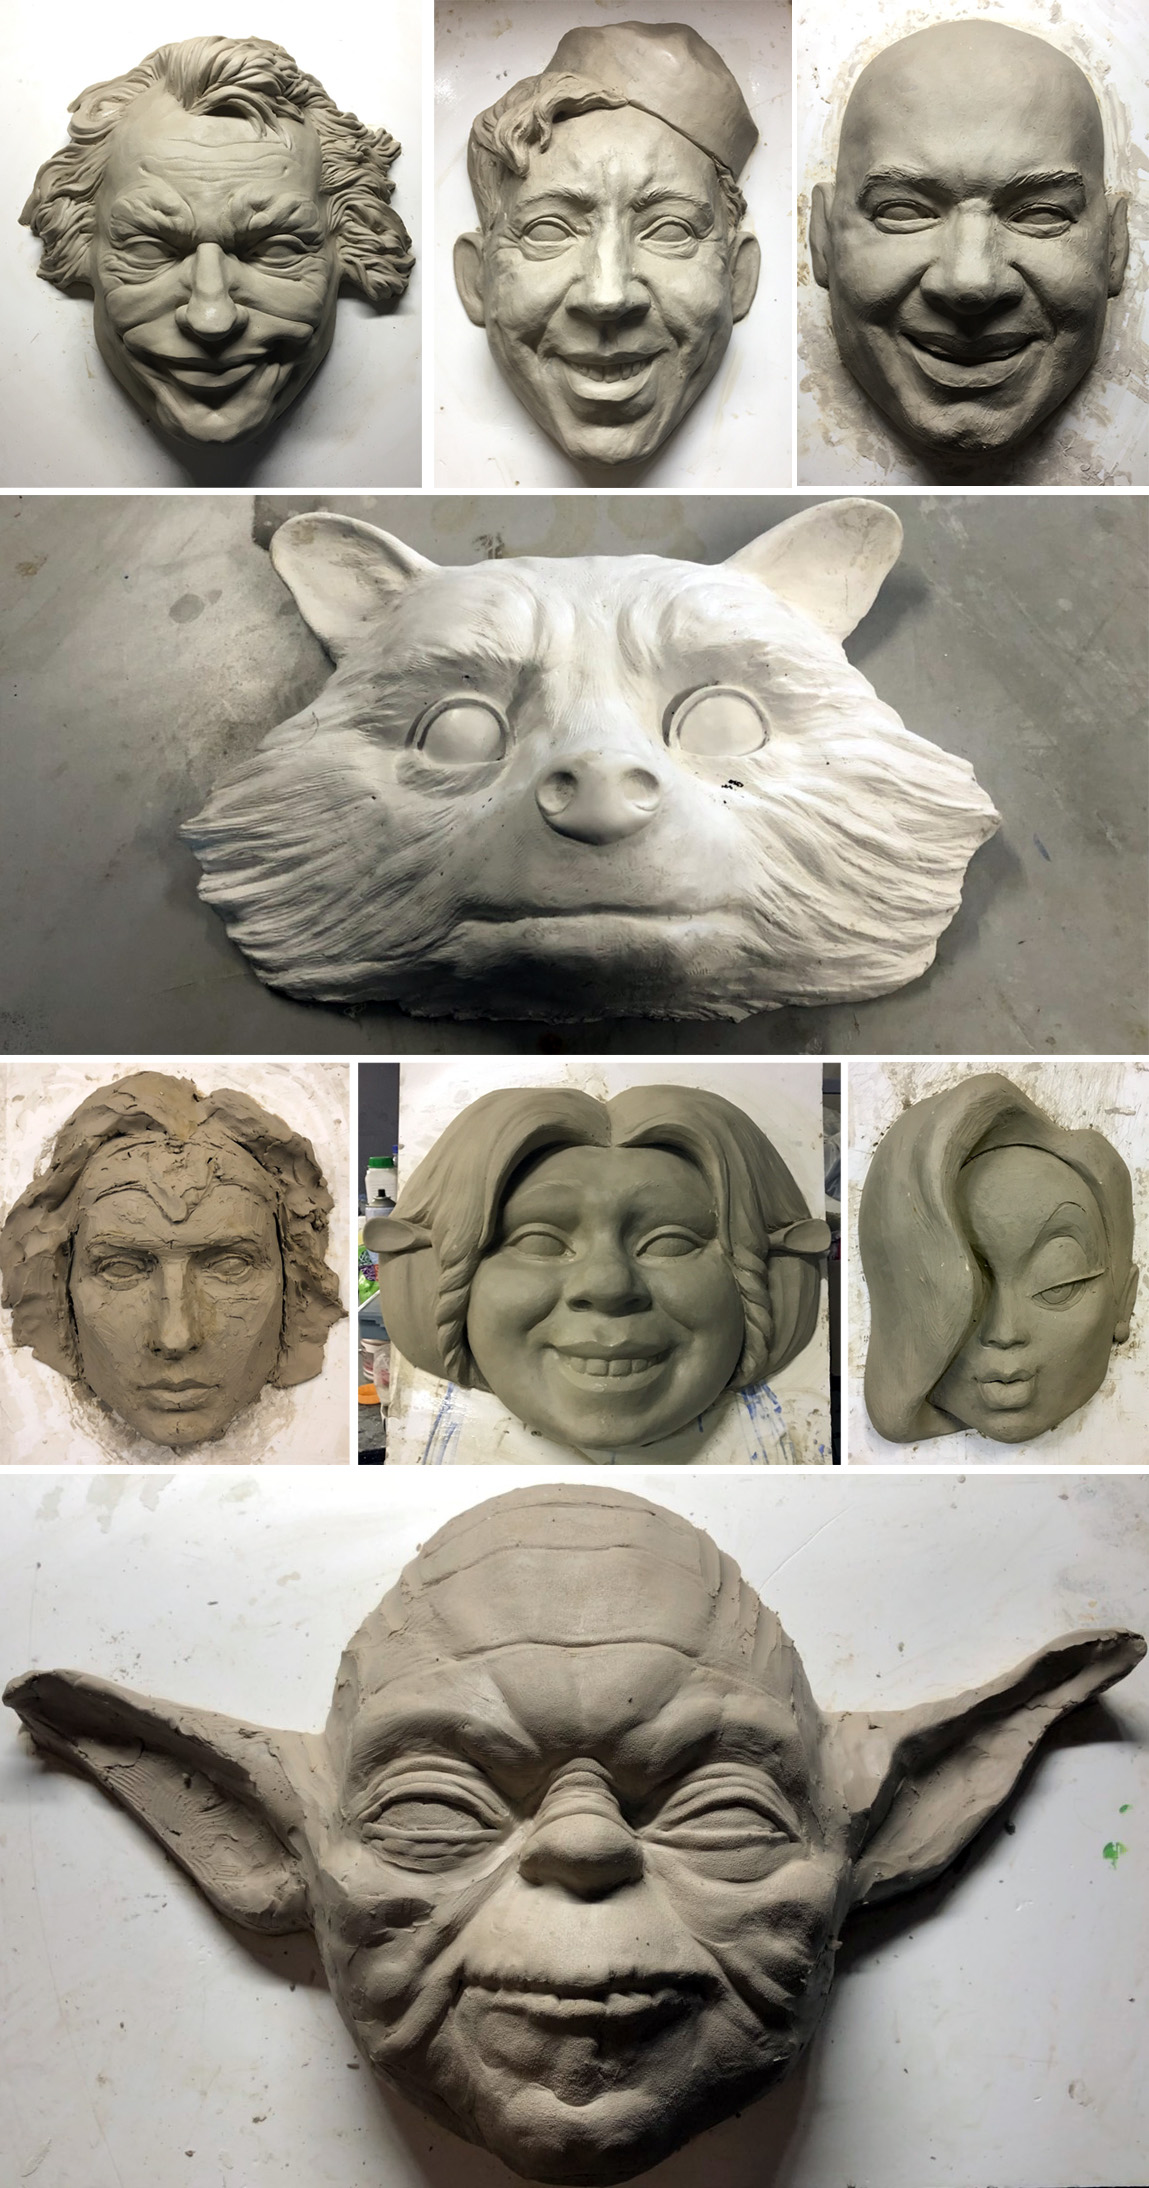 Making custom masks